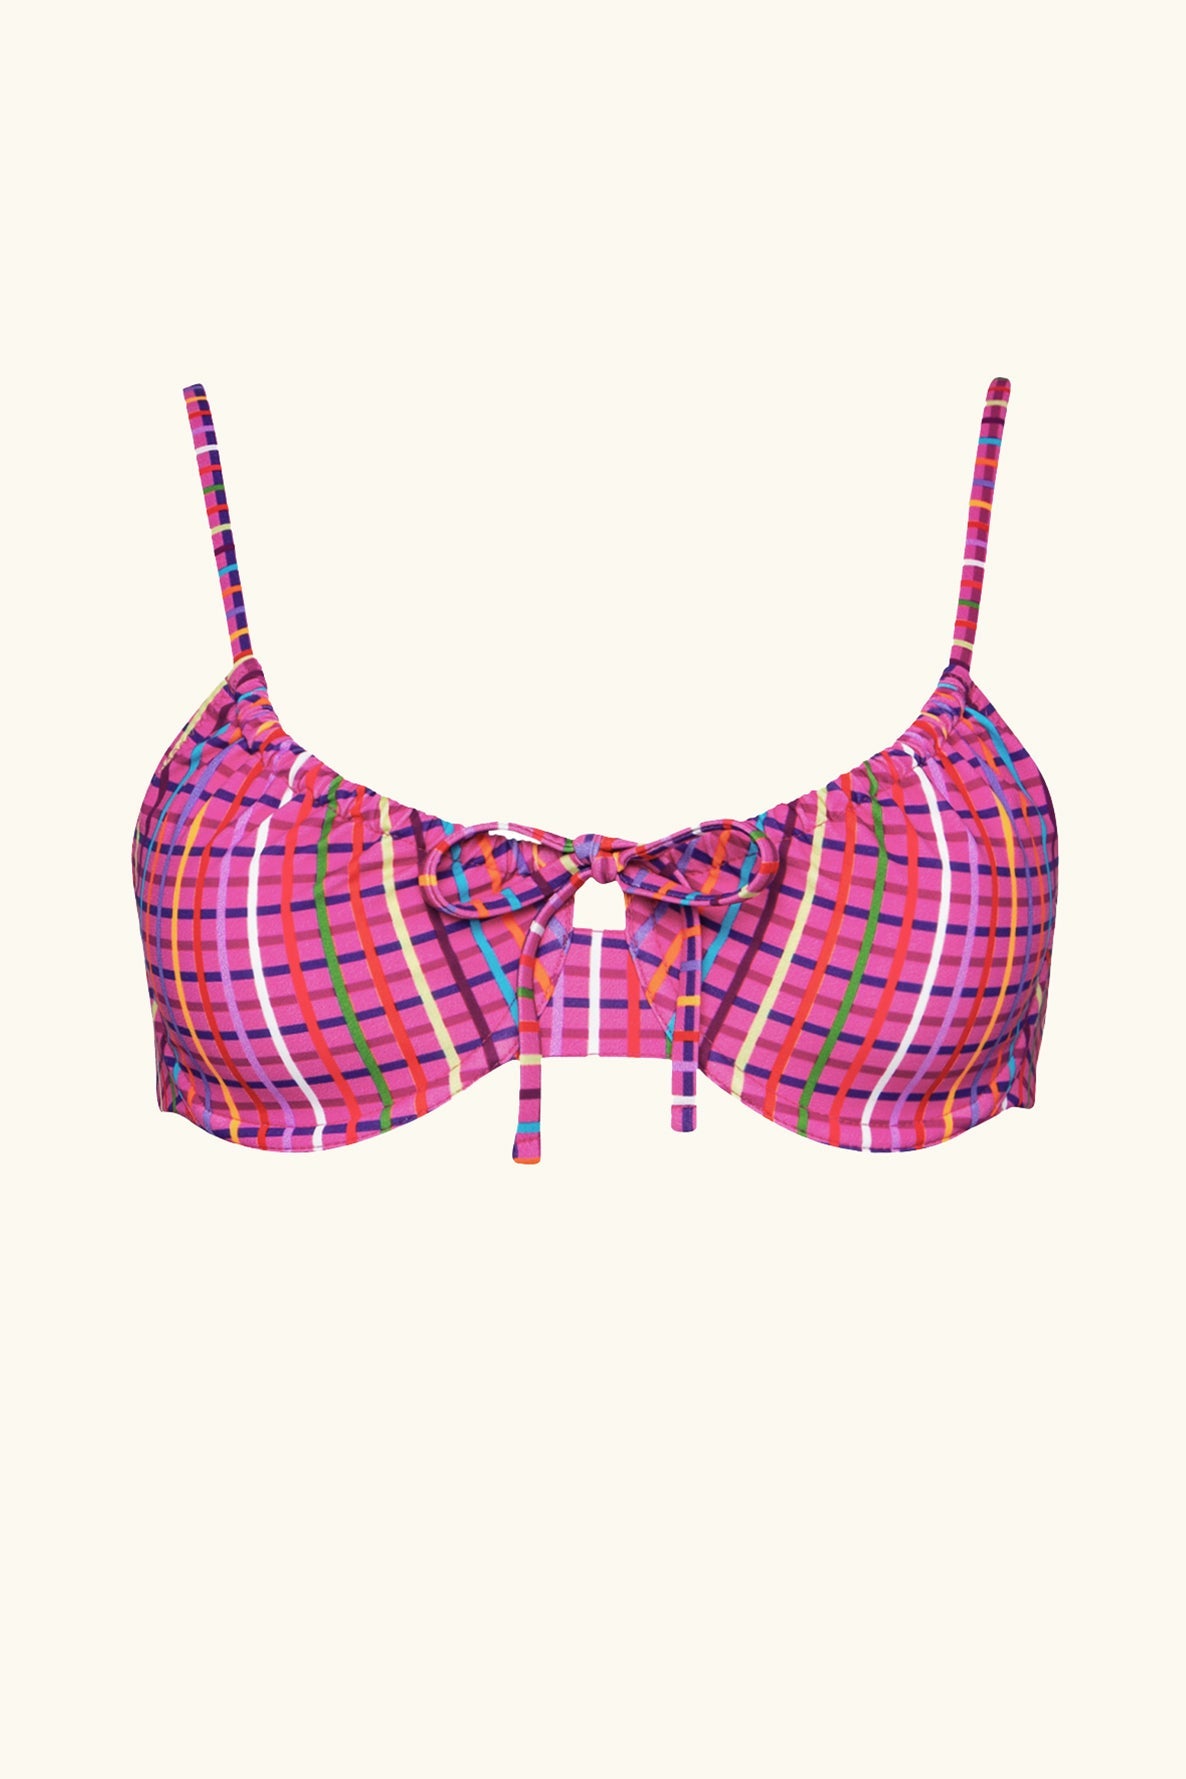 pink multicolored 90s inspired bikini top